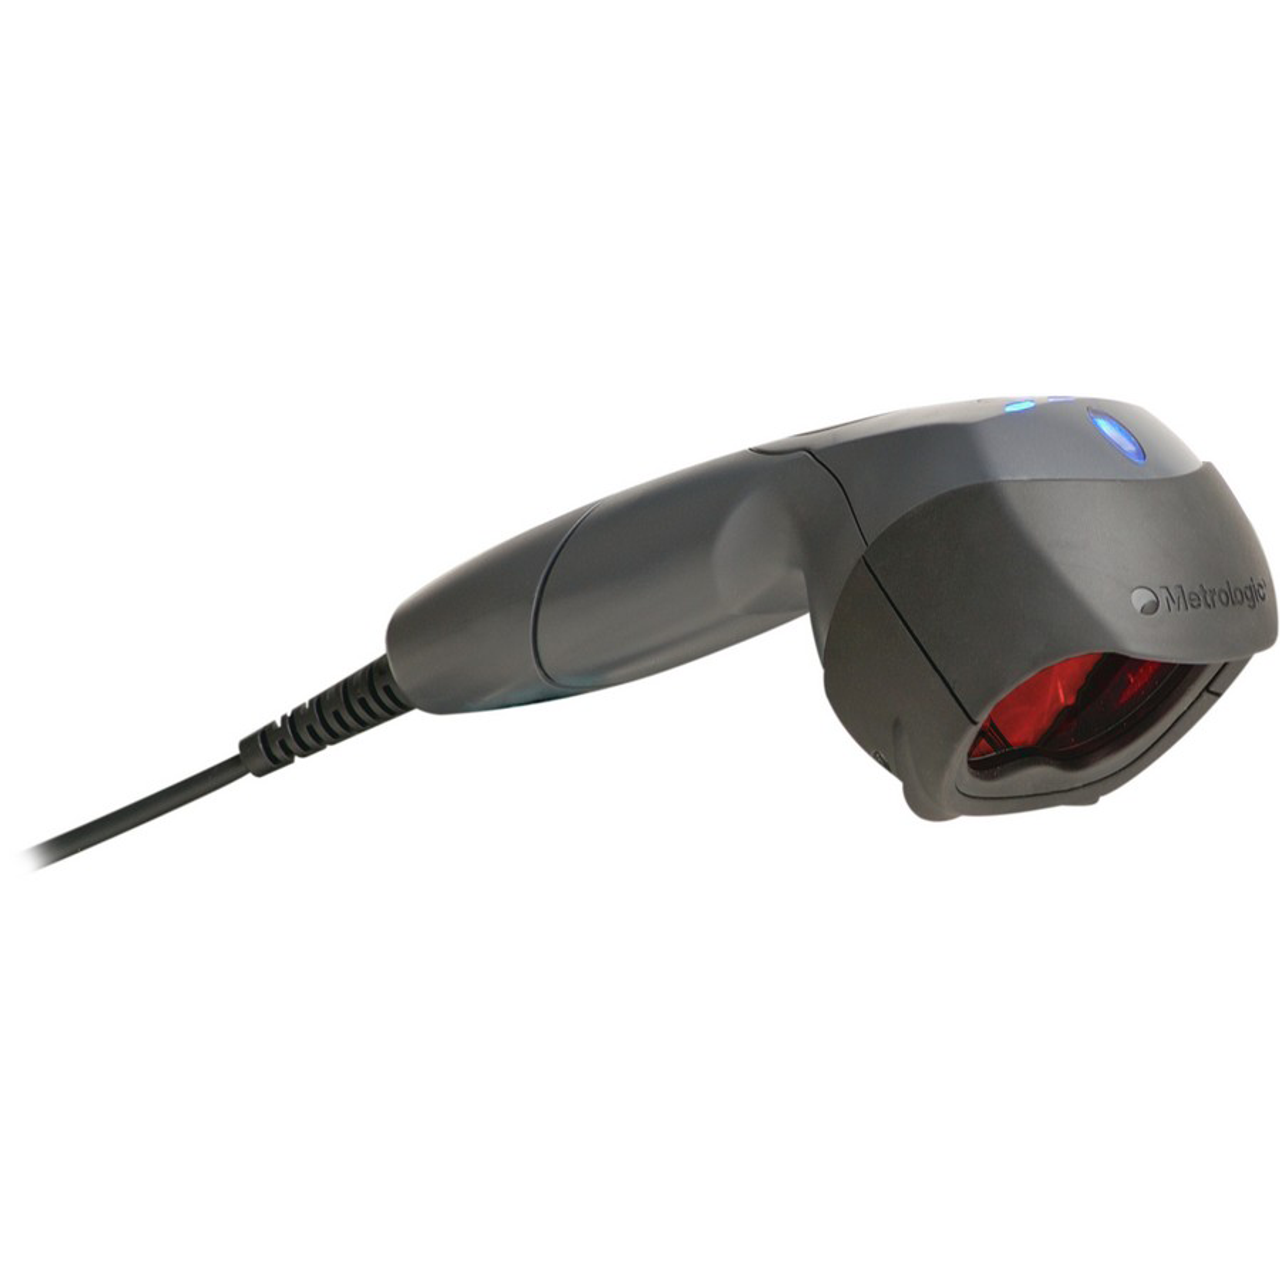 Honeywell (Metrologic) Fusion MS3780 Omni Directional POS Barcode Scanner